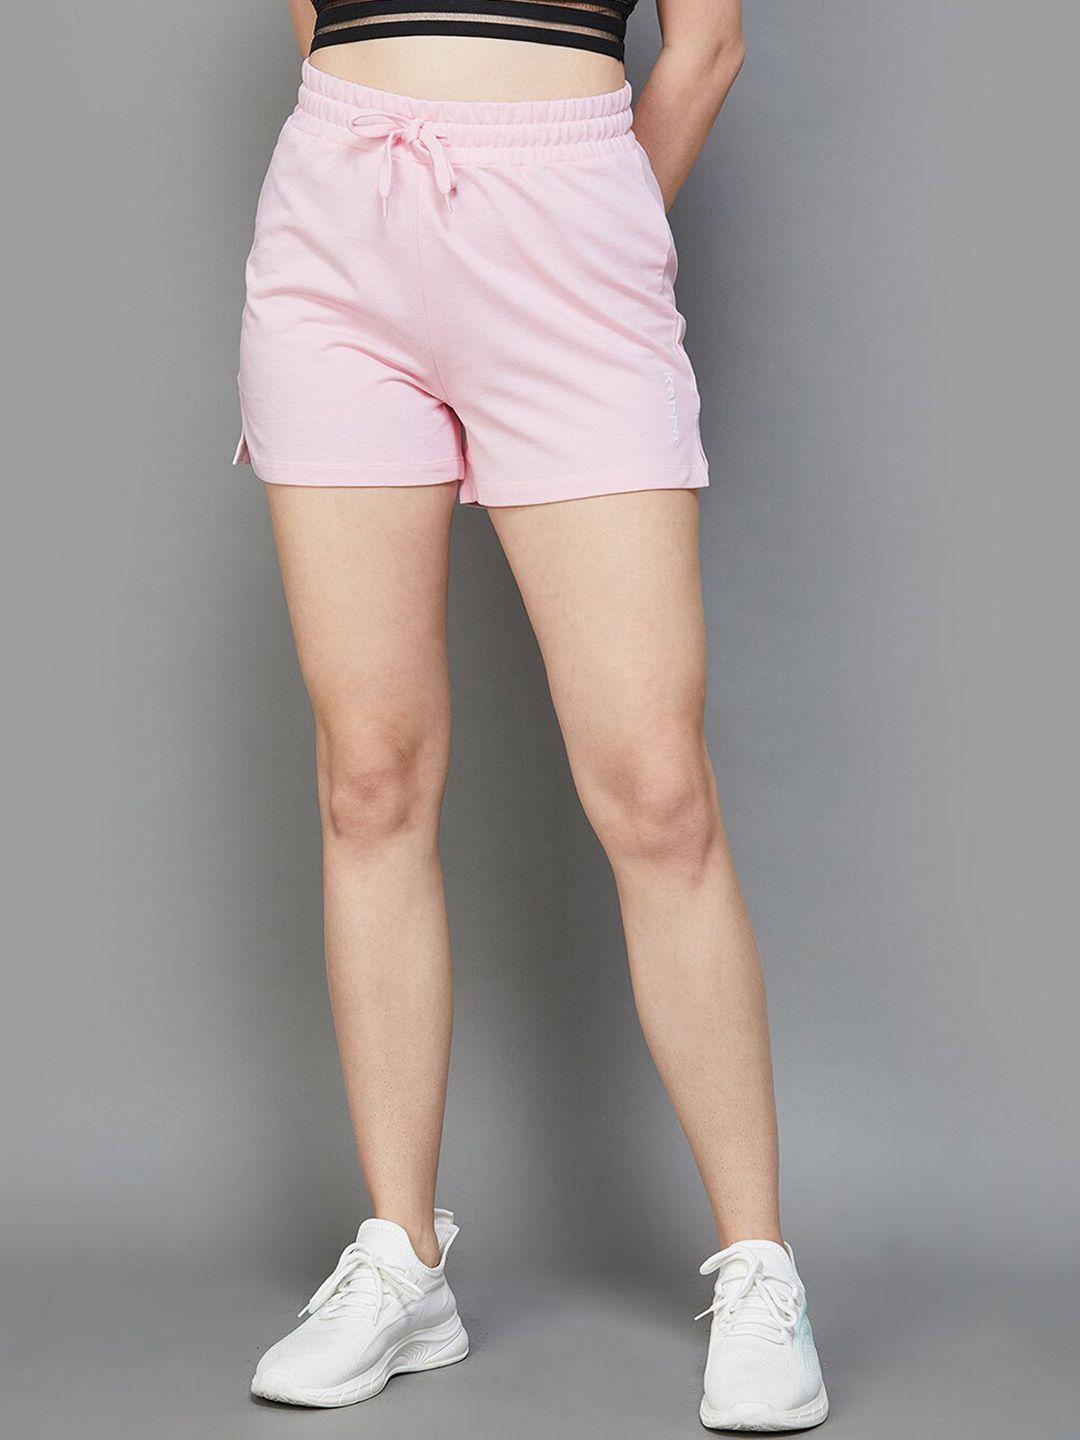 kappa-women-mid-rise-shorts